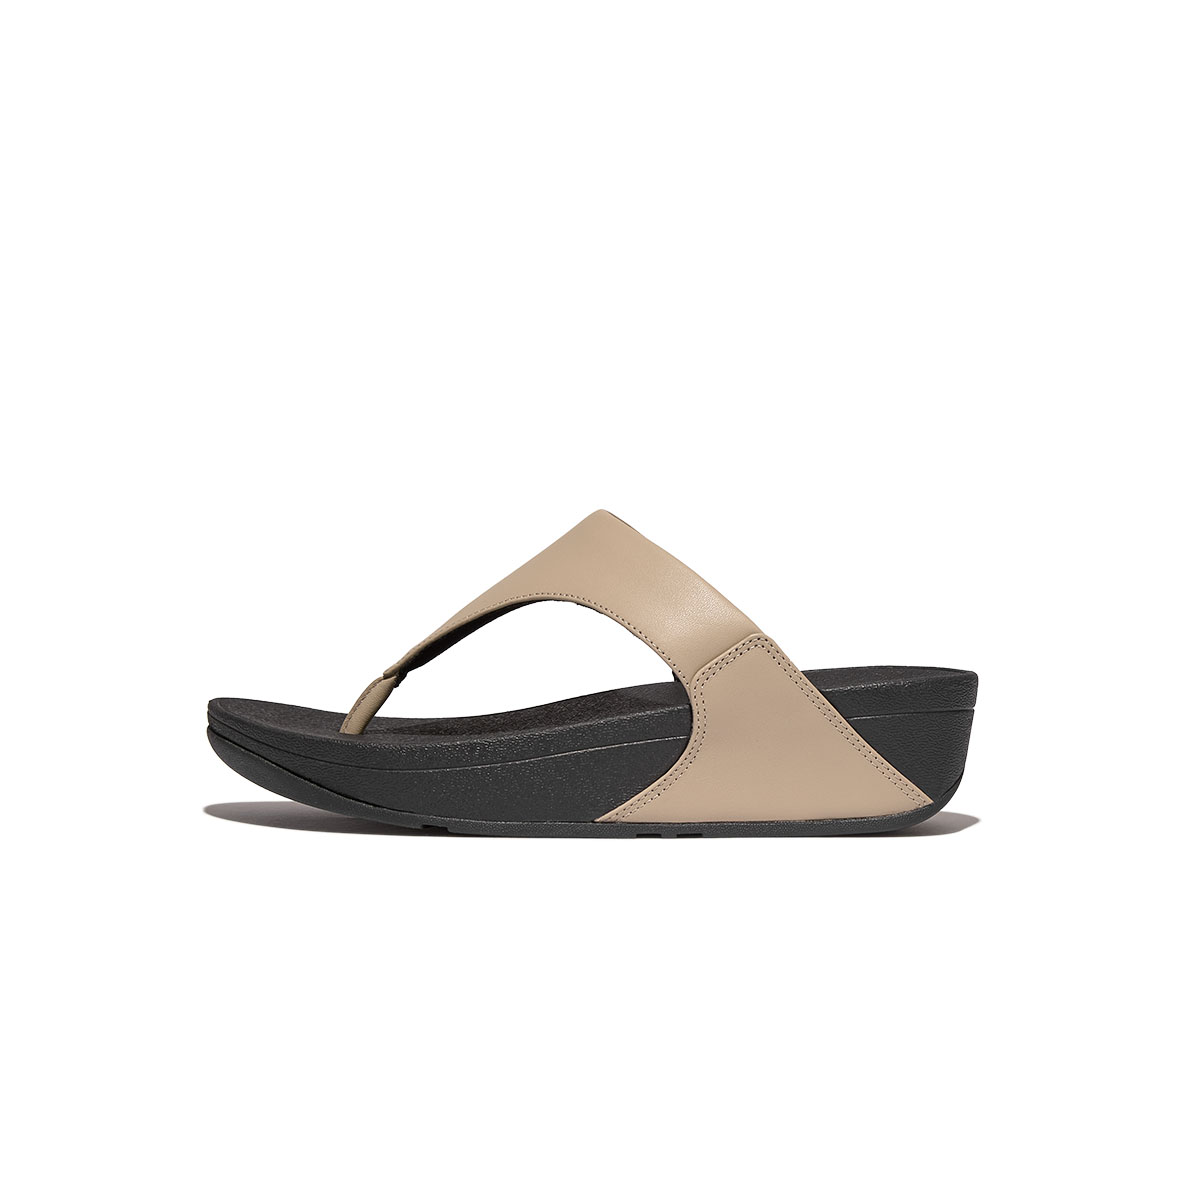 LULU Leather Toe-Post Sandals - Latte Beige (I88-A94) | FitFlop Singapore